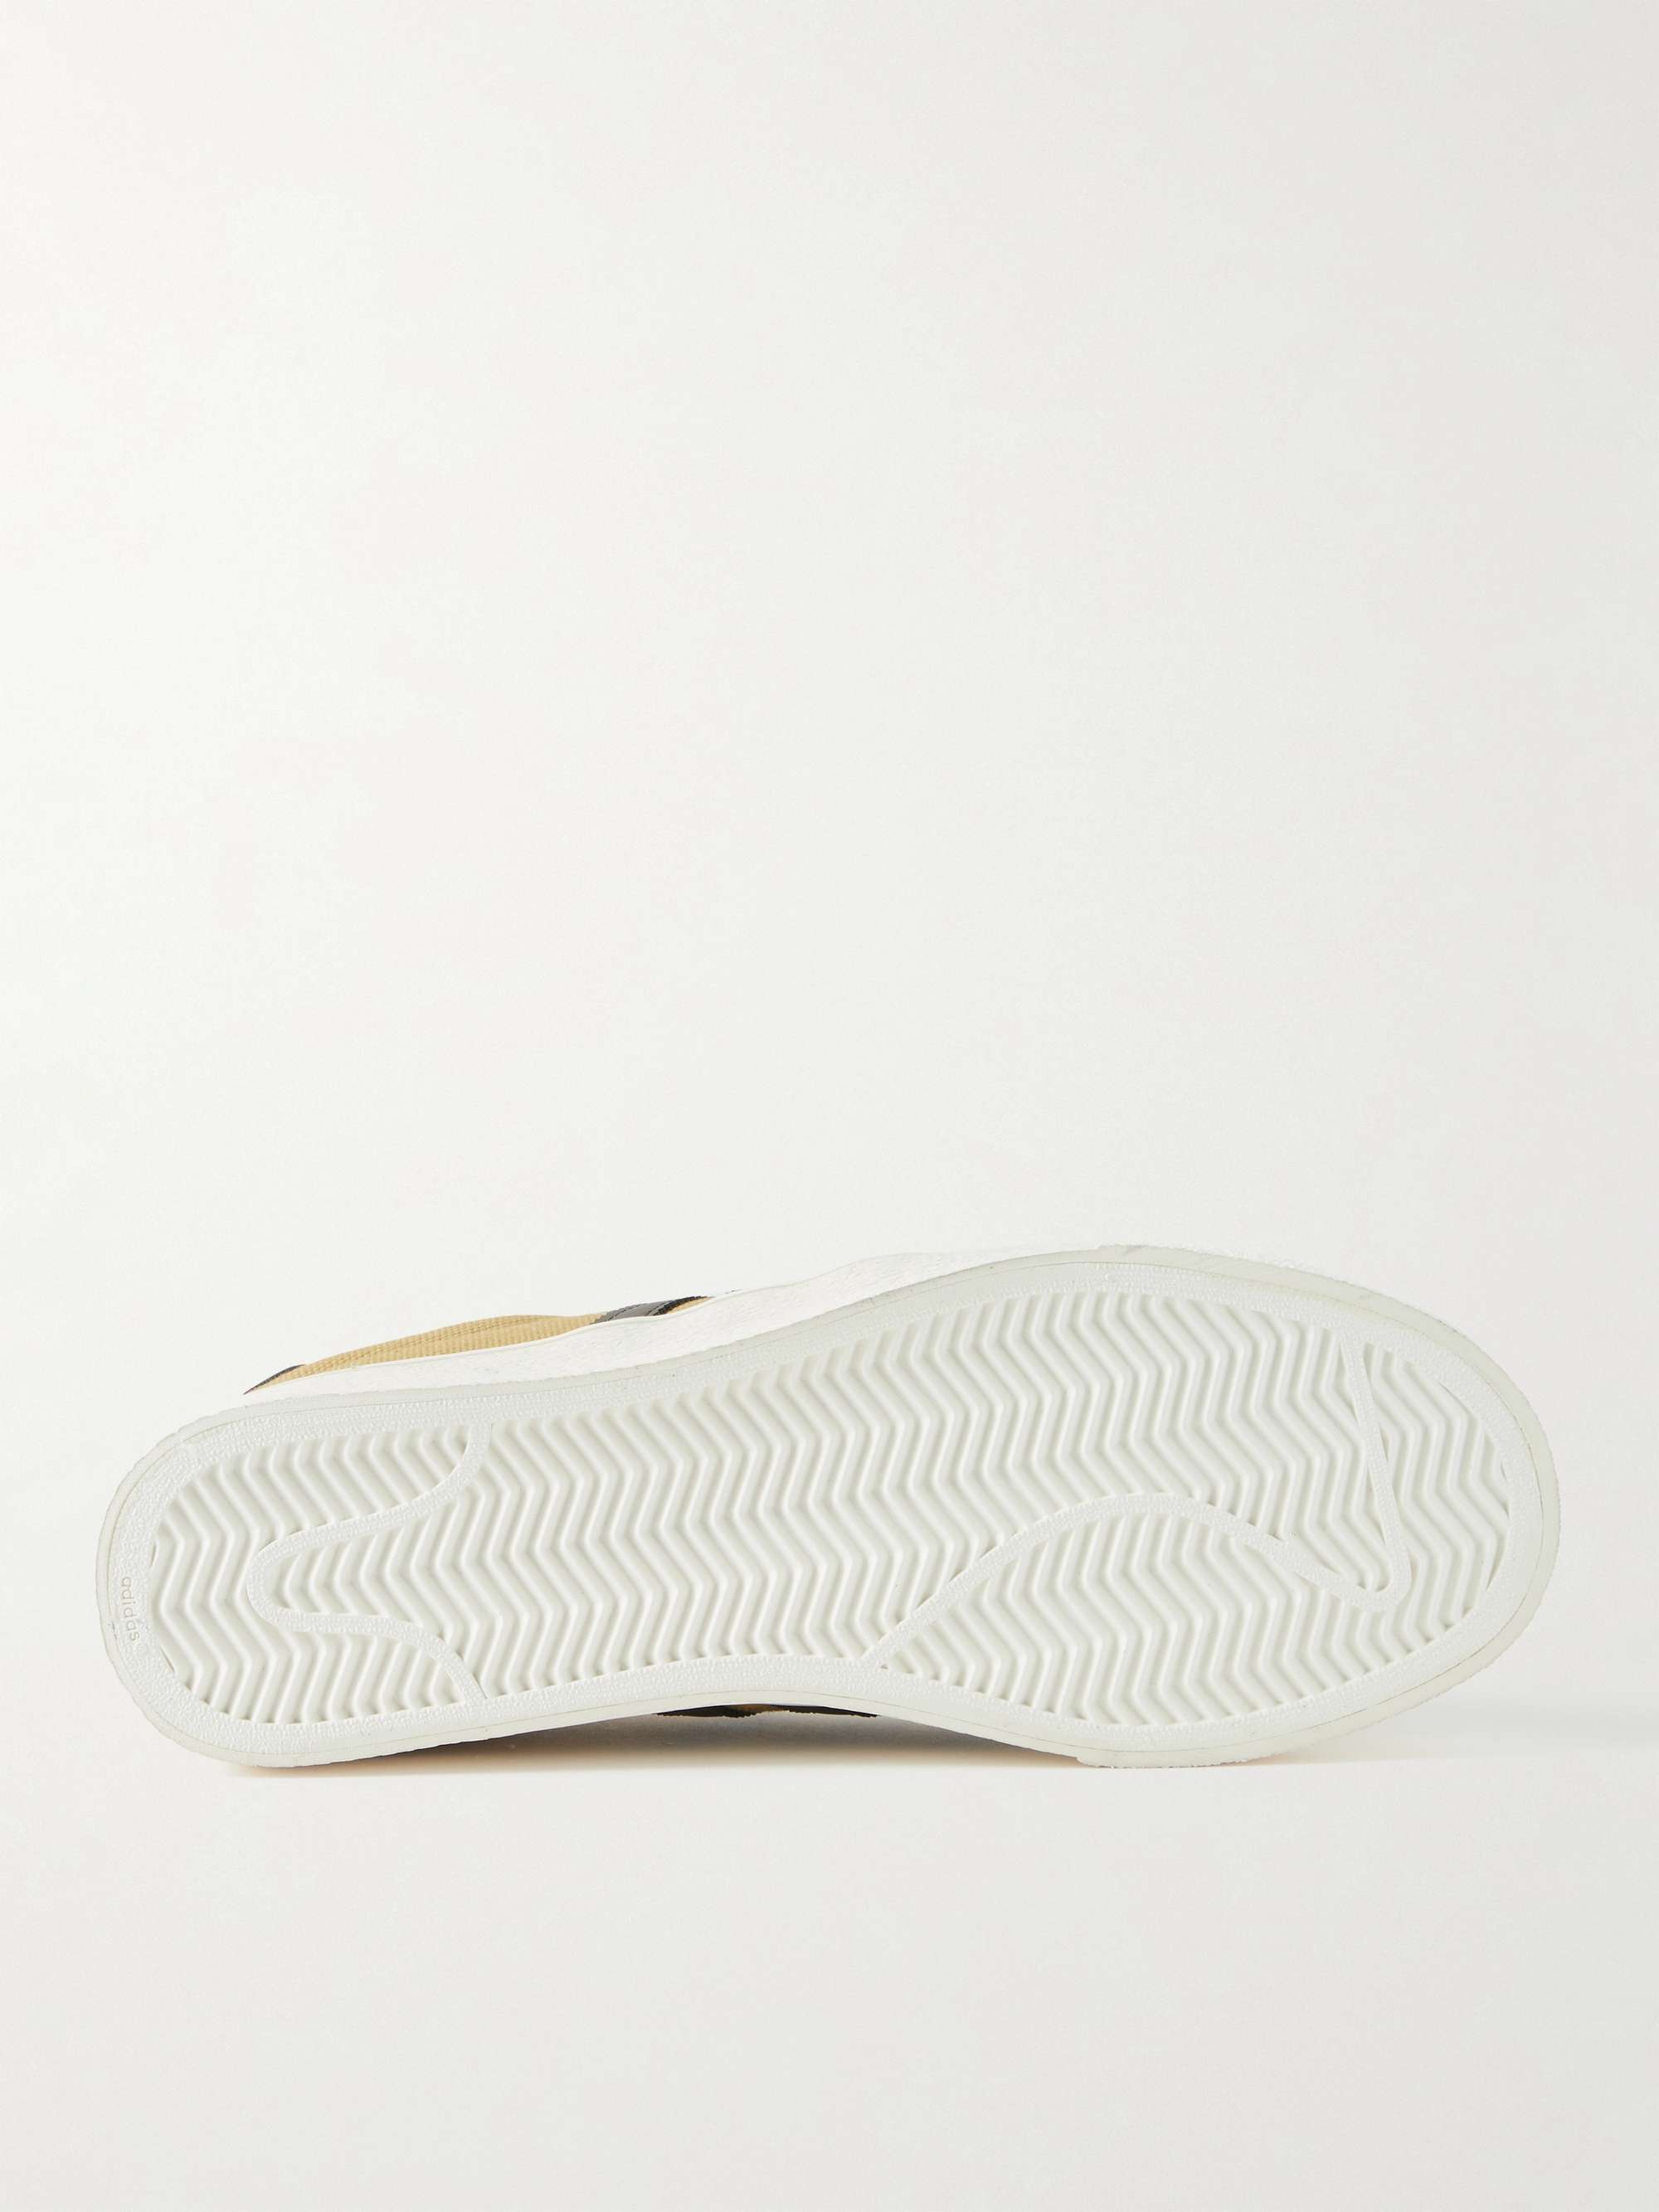 ADIDAS CONSORTIUM + Noah Adria Leather-Trimmed Canvas Sneakers | MR PORTER